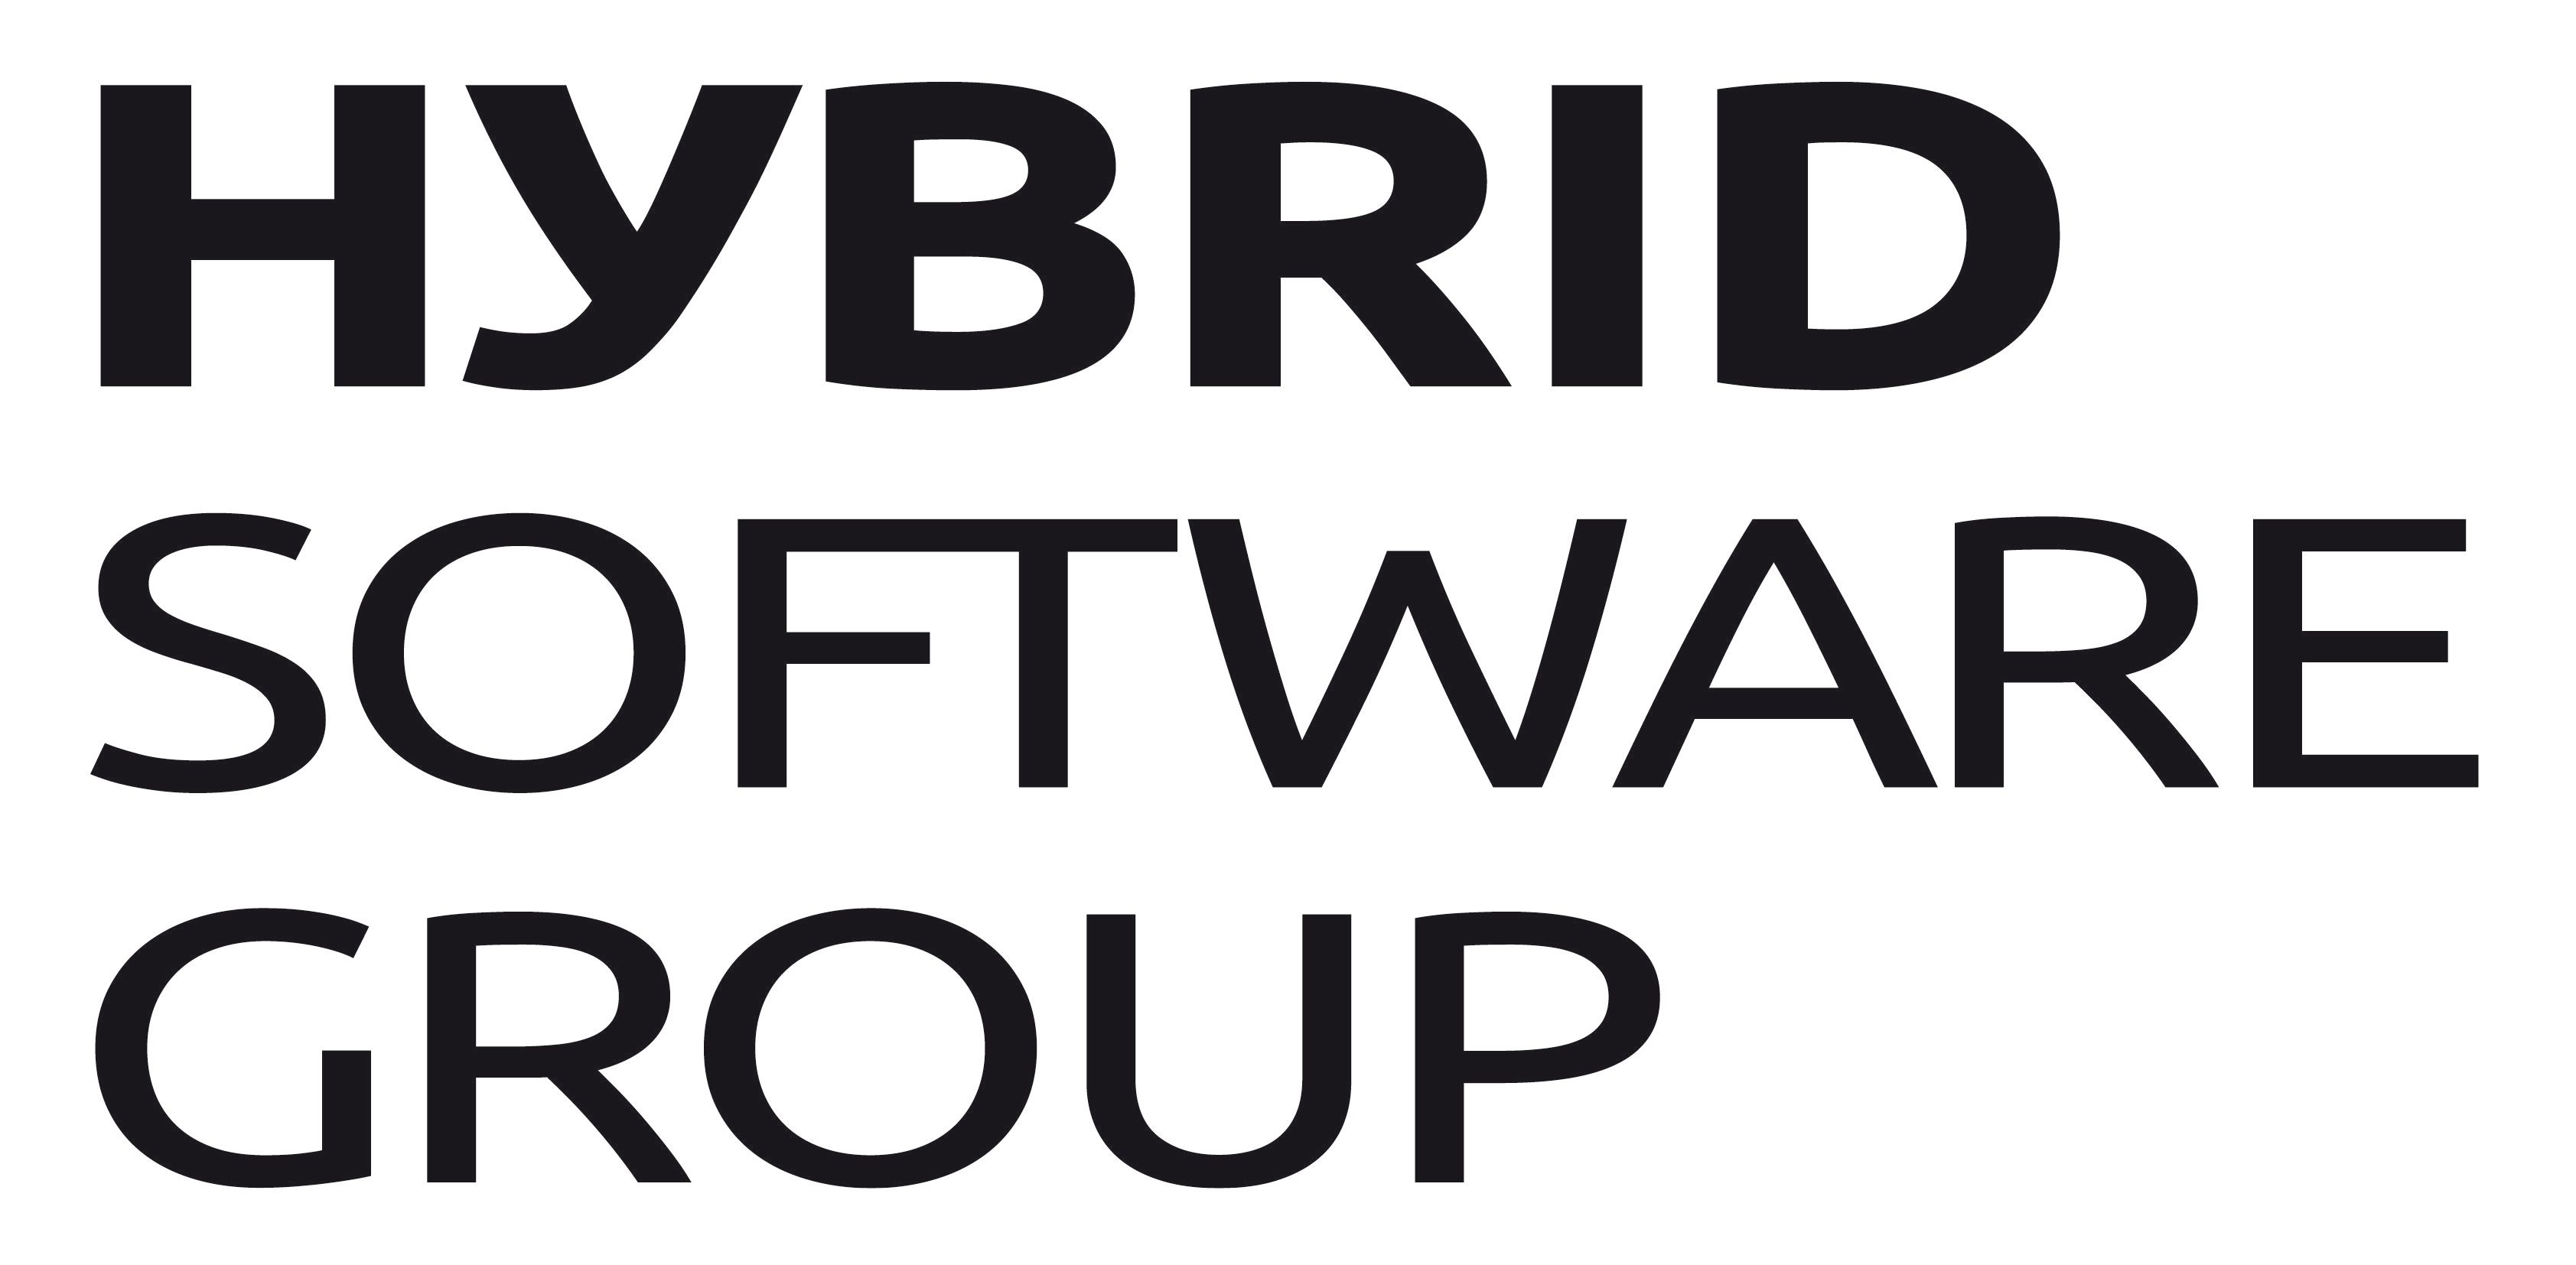 Hybrid Software Group PLC